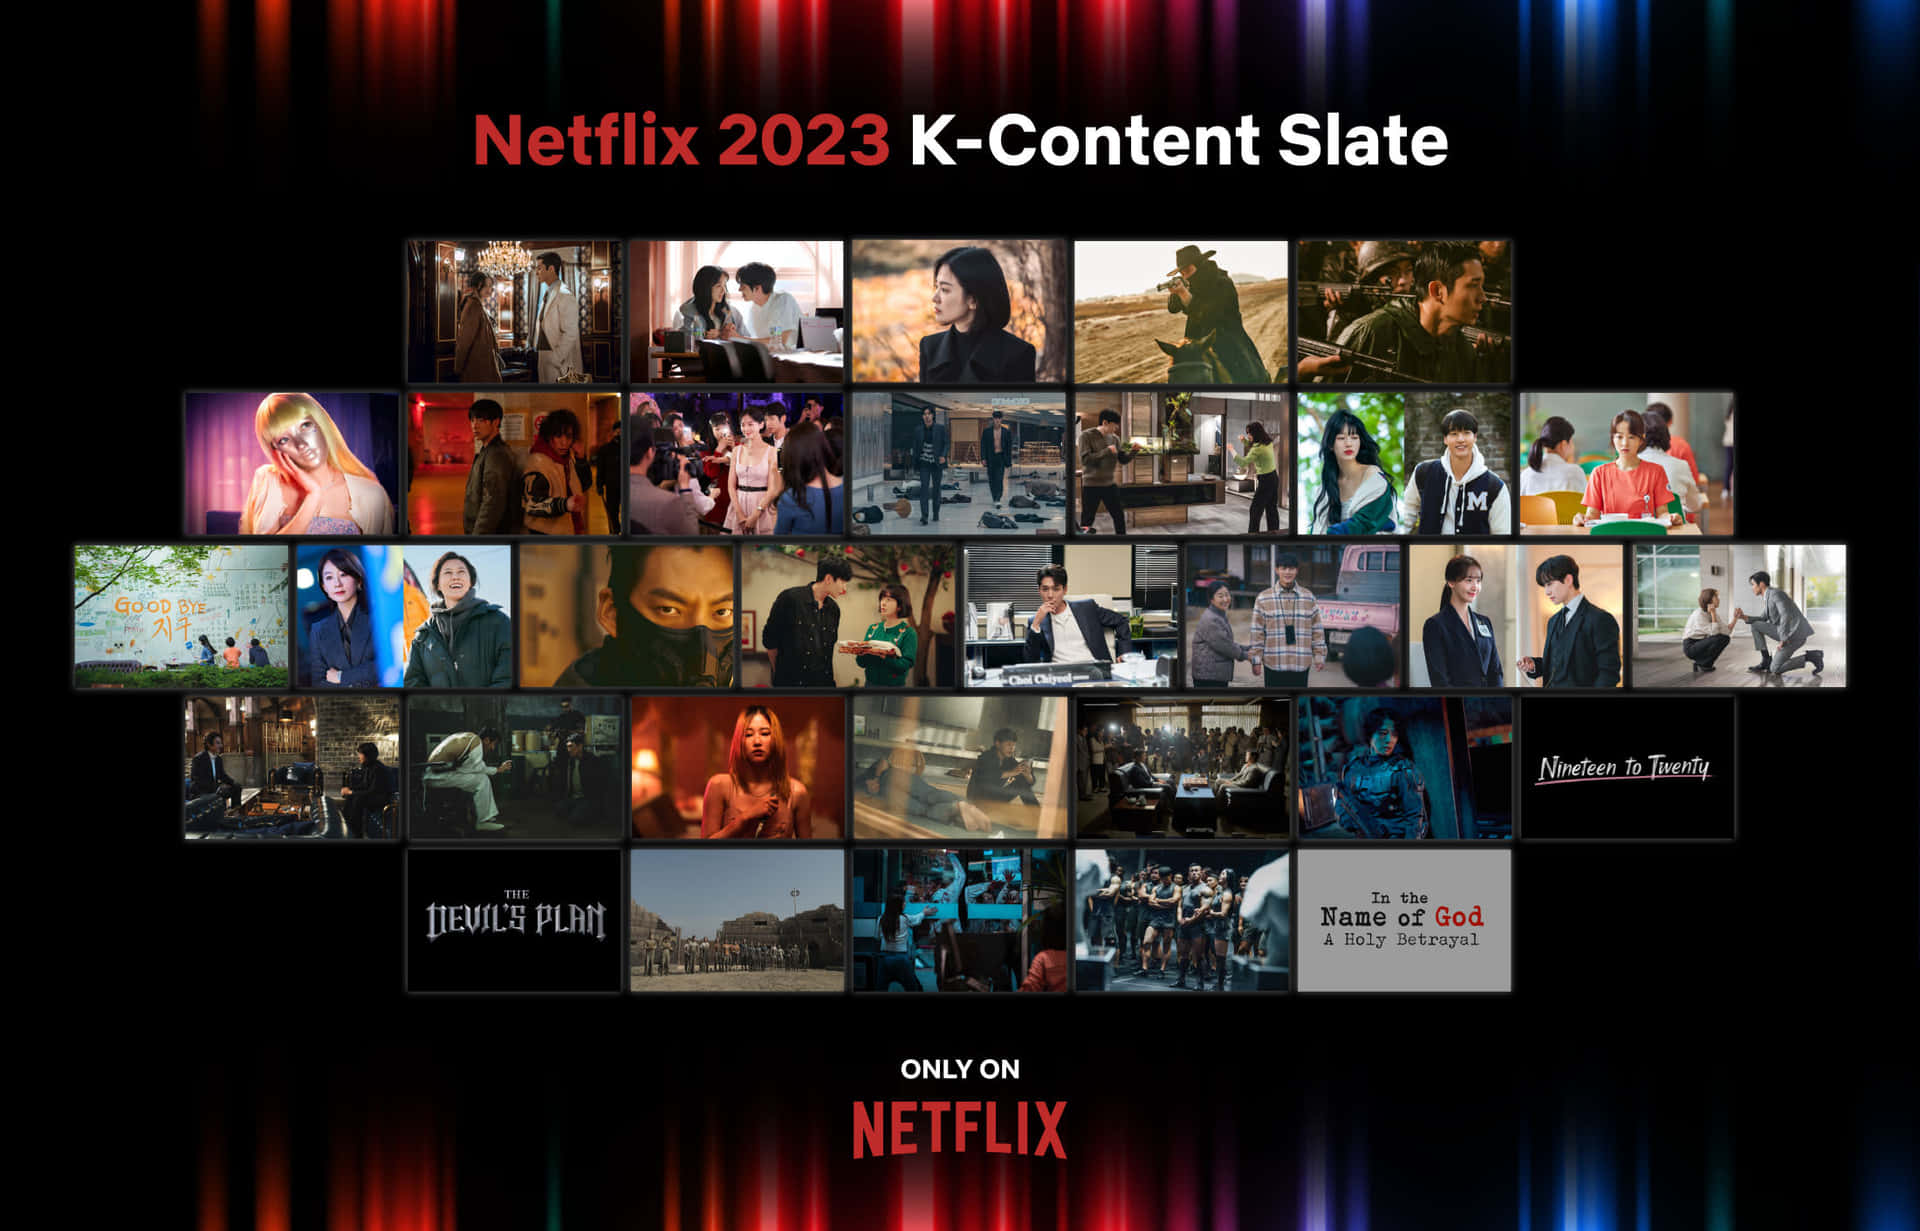 Enjoy a World of Entertainment with Netflix